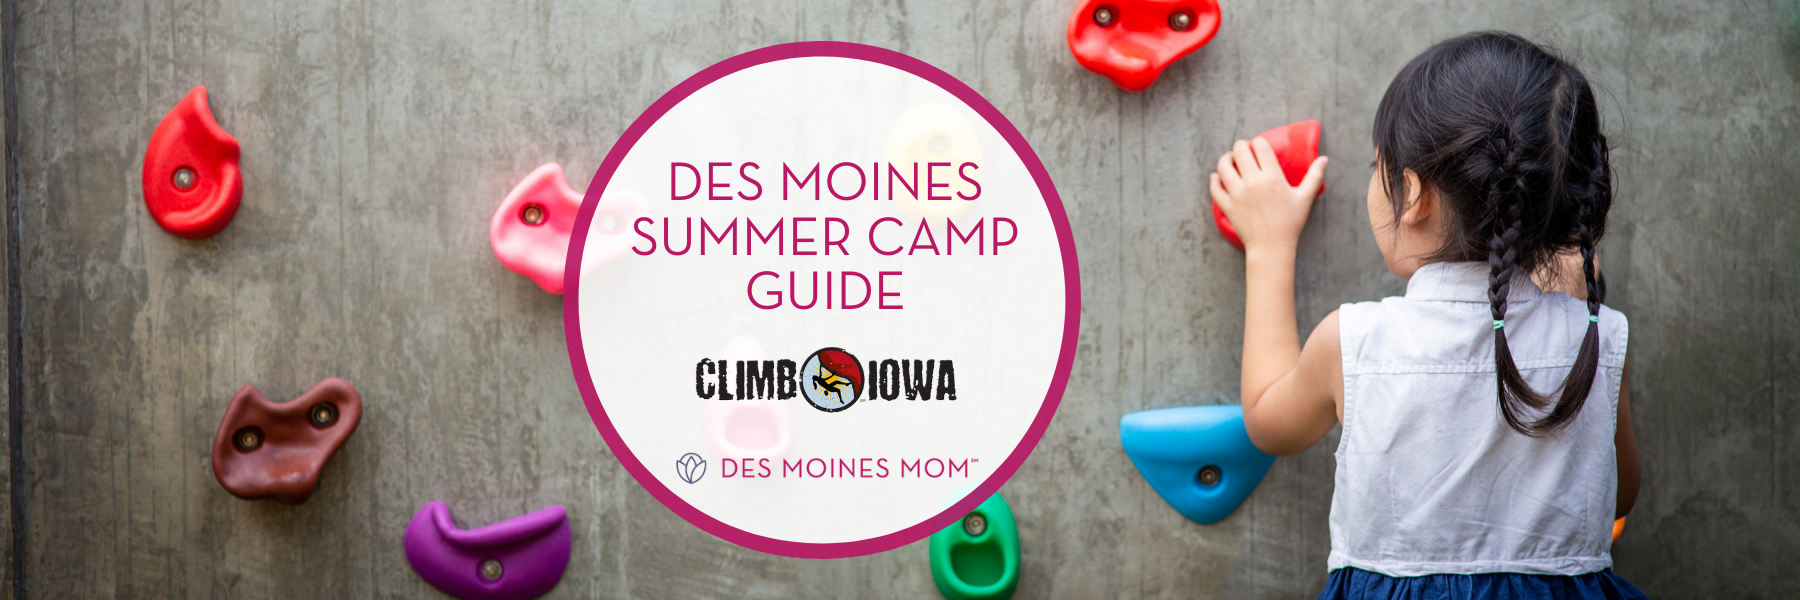 Climbing Wall Girl Des Moines Summer Camp